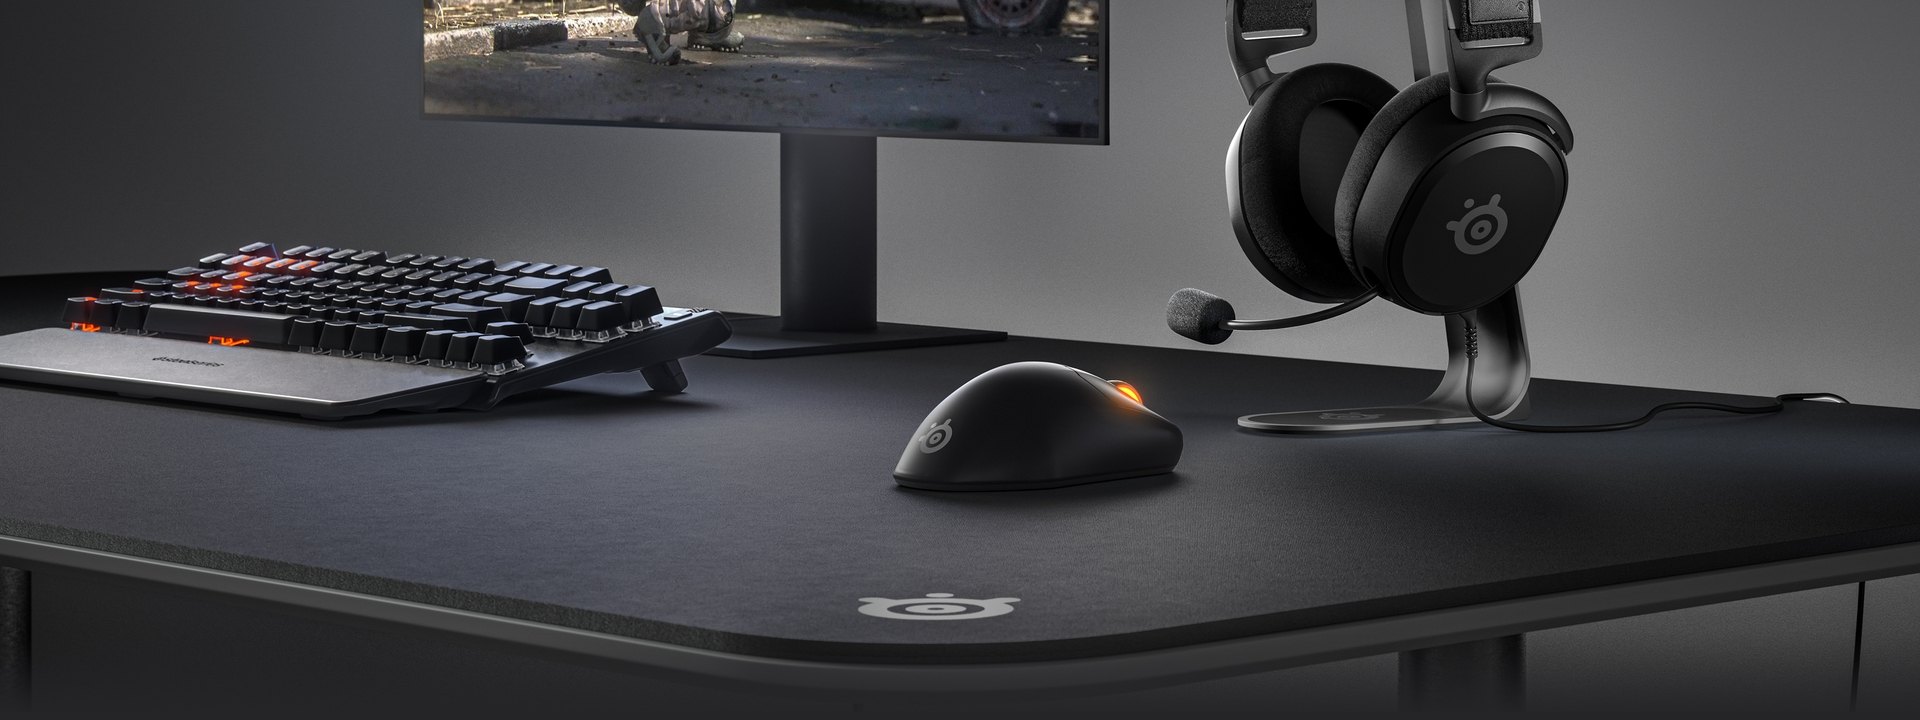 A sleek desktop setup feature a Prime mouse and headset.